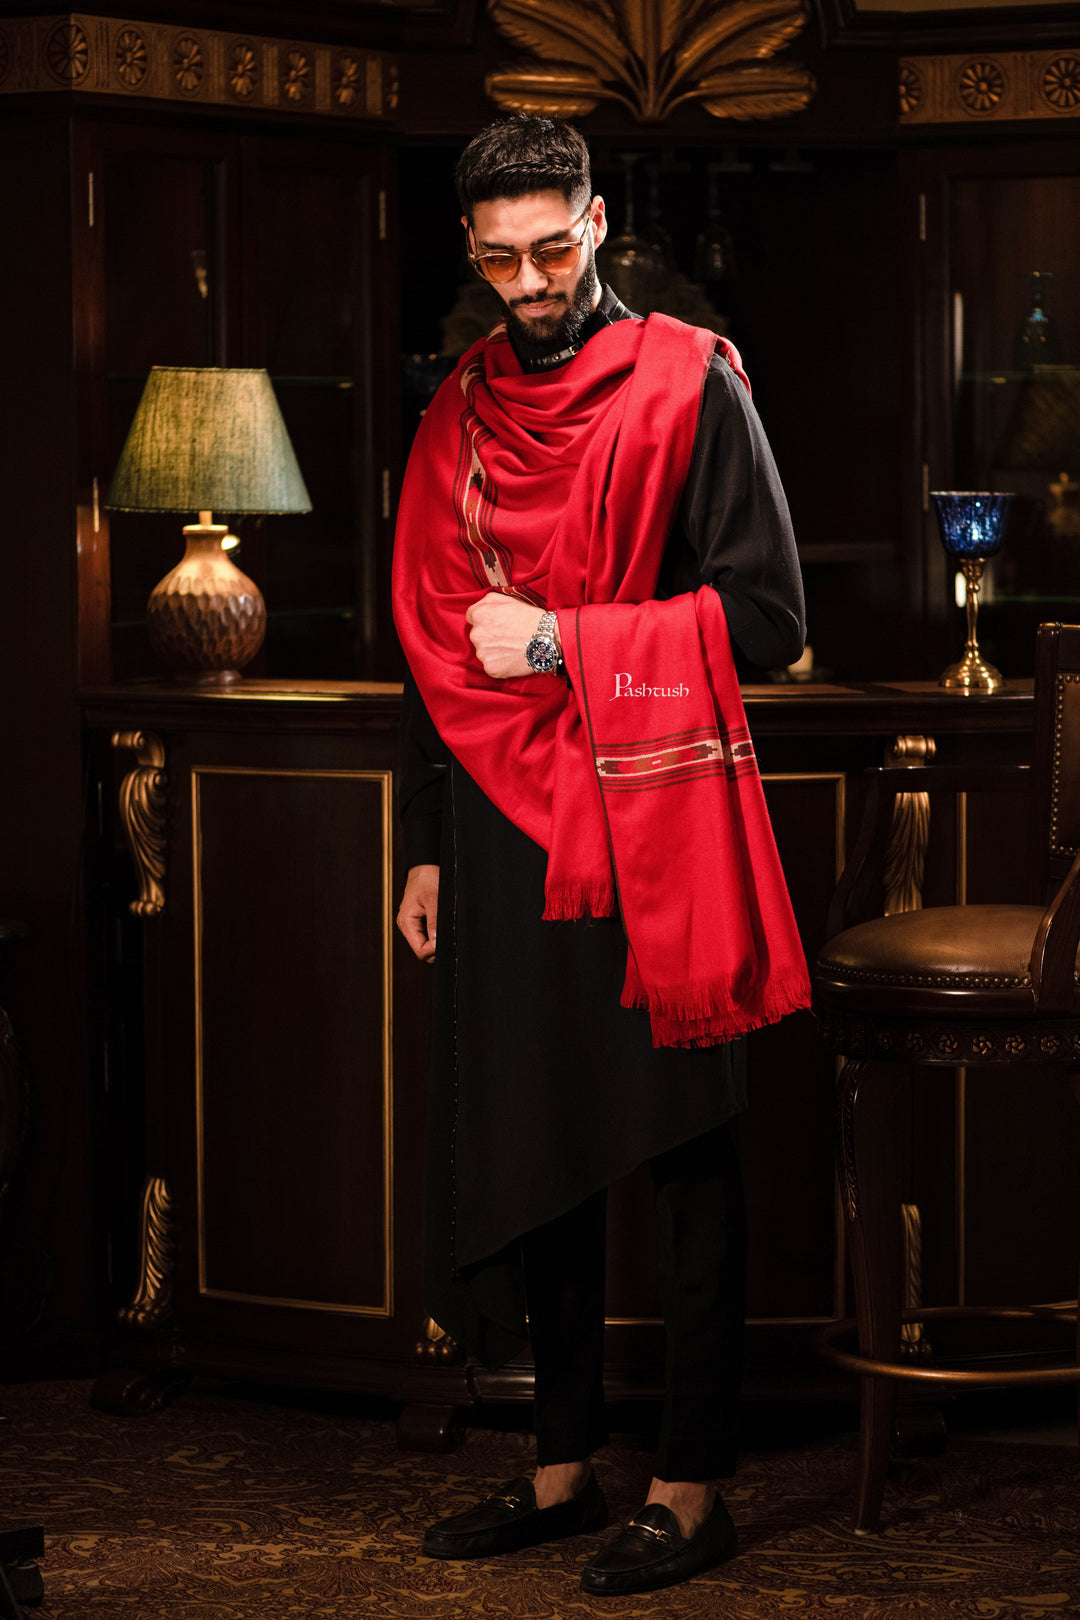 Pashtush India Mens Shawls Gents Shawl Pashtush men Fine Wool shawl, Aztec design, Mens Full Size, Maroon